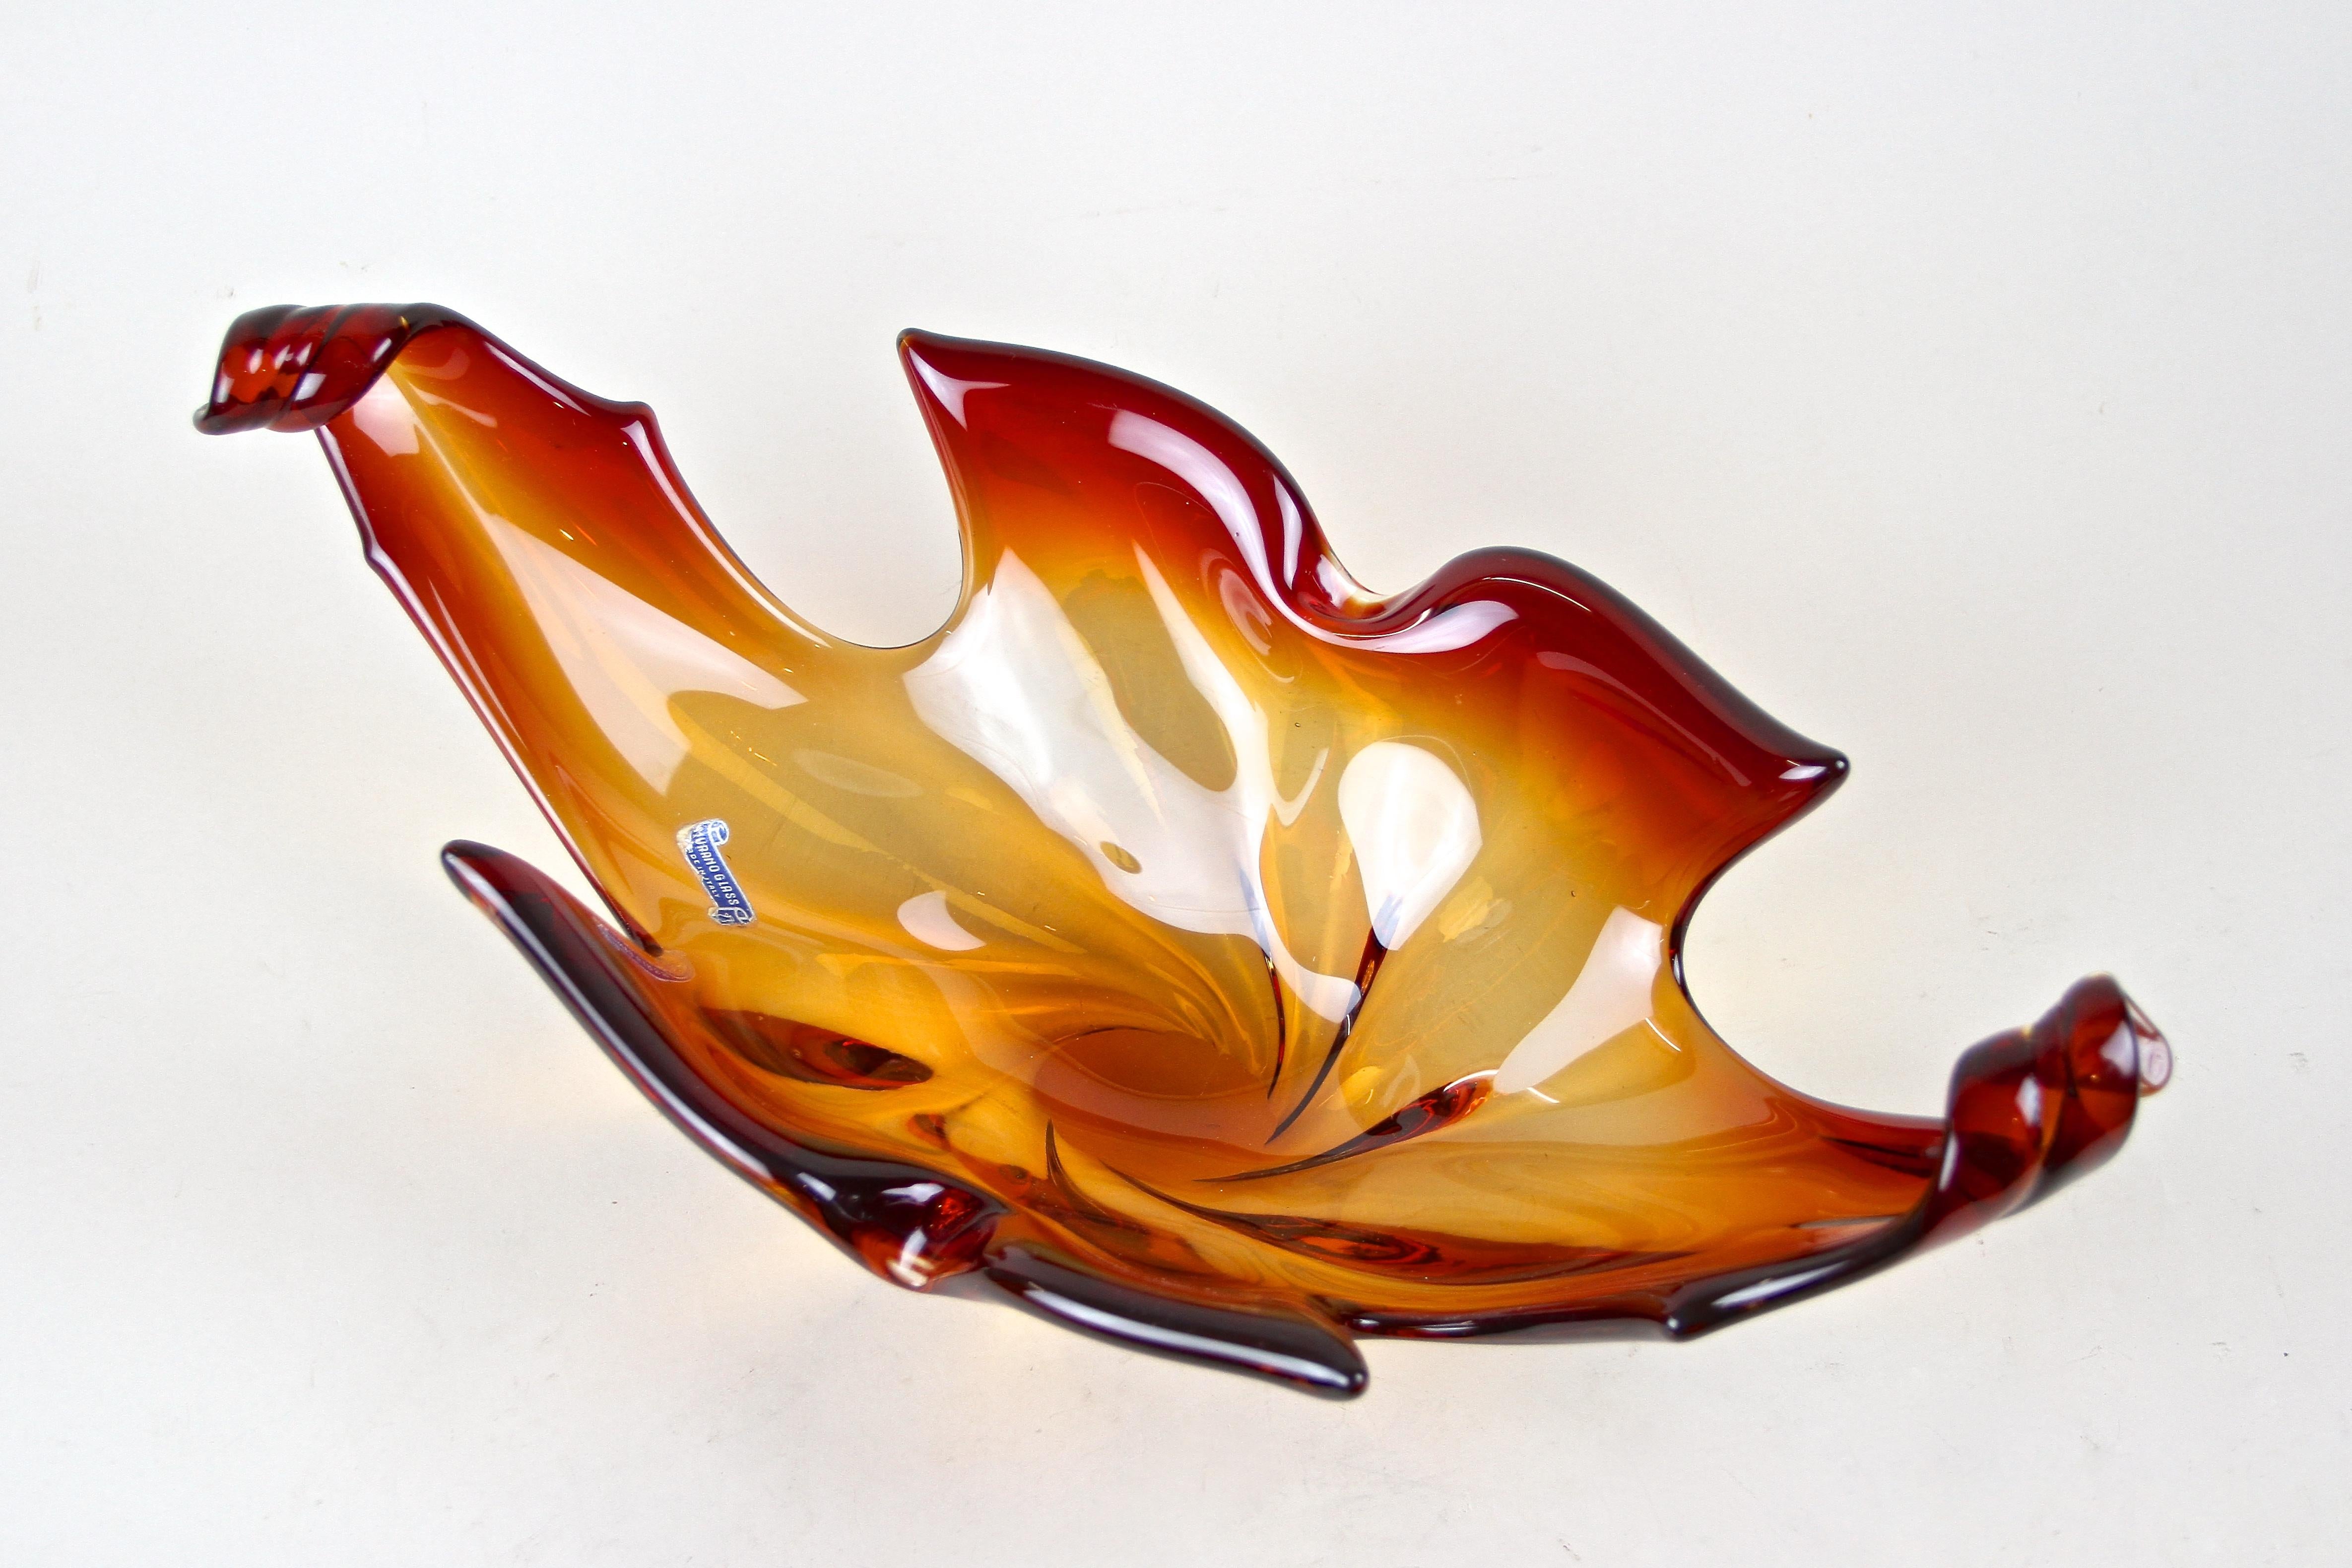 Murano Glass Bowl Red/Orange Mid-Century, Italy, circa 1960/70 For Sale 3